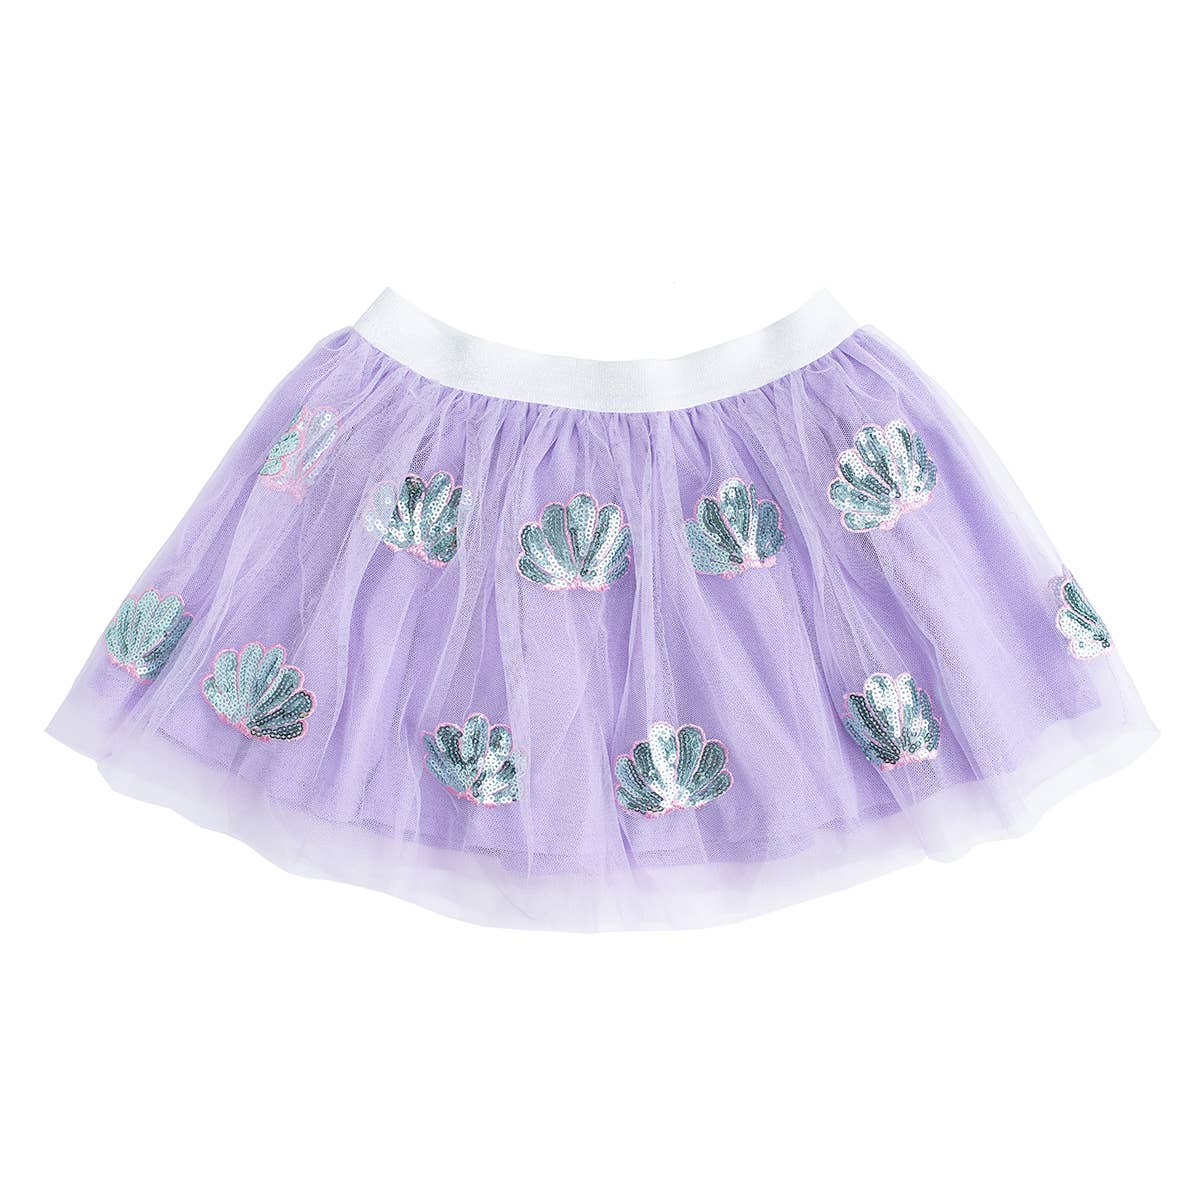 Sweet Wink - Seashell Tutu - Dress Up Skirt - Kids Summer Tutu